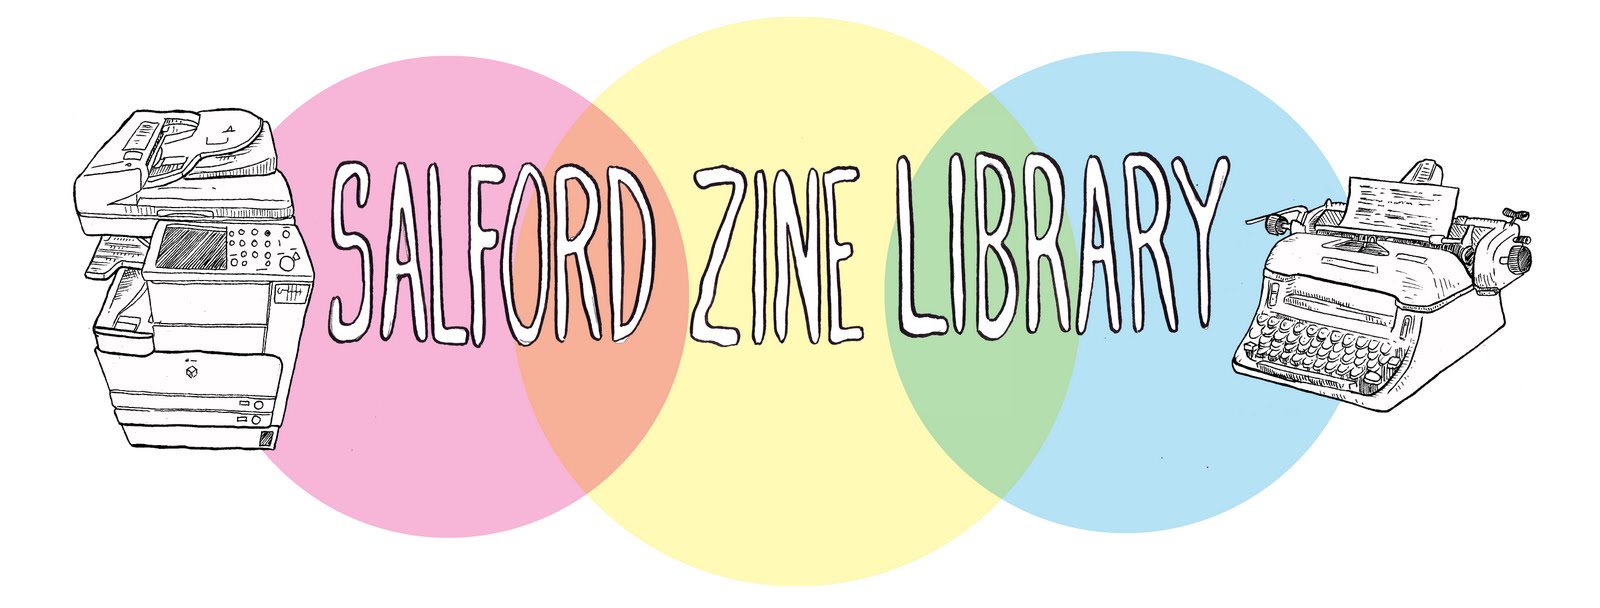 Salford Zine Library